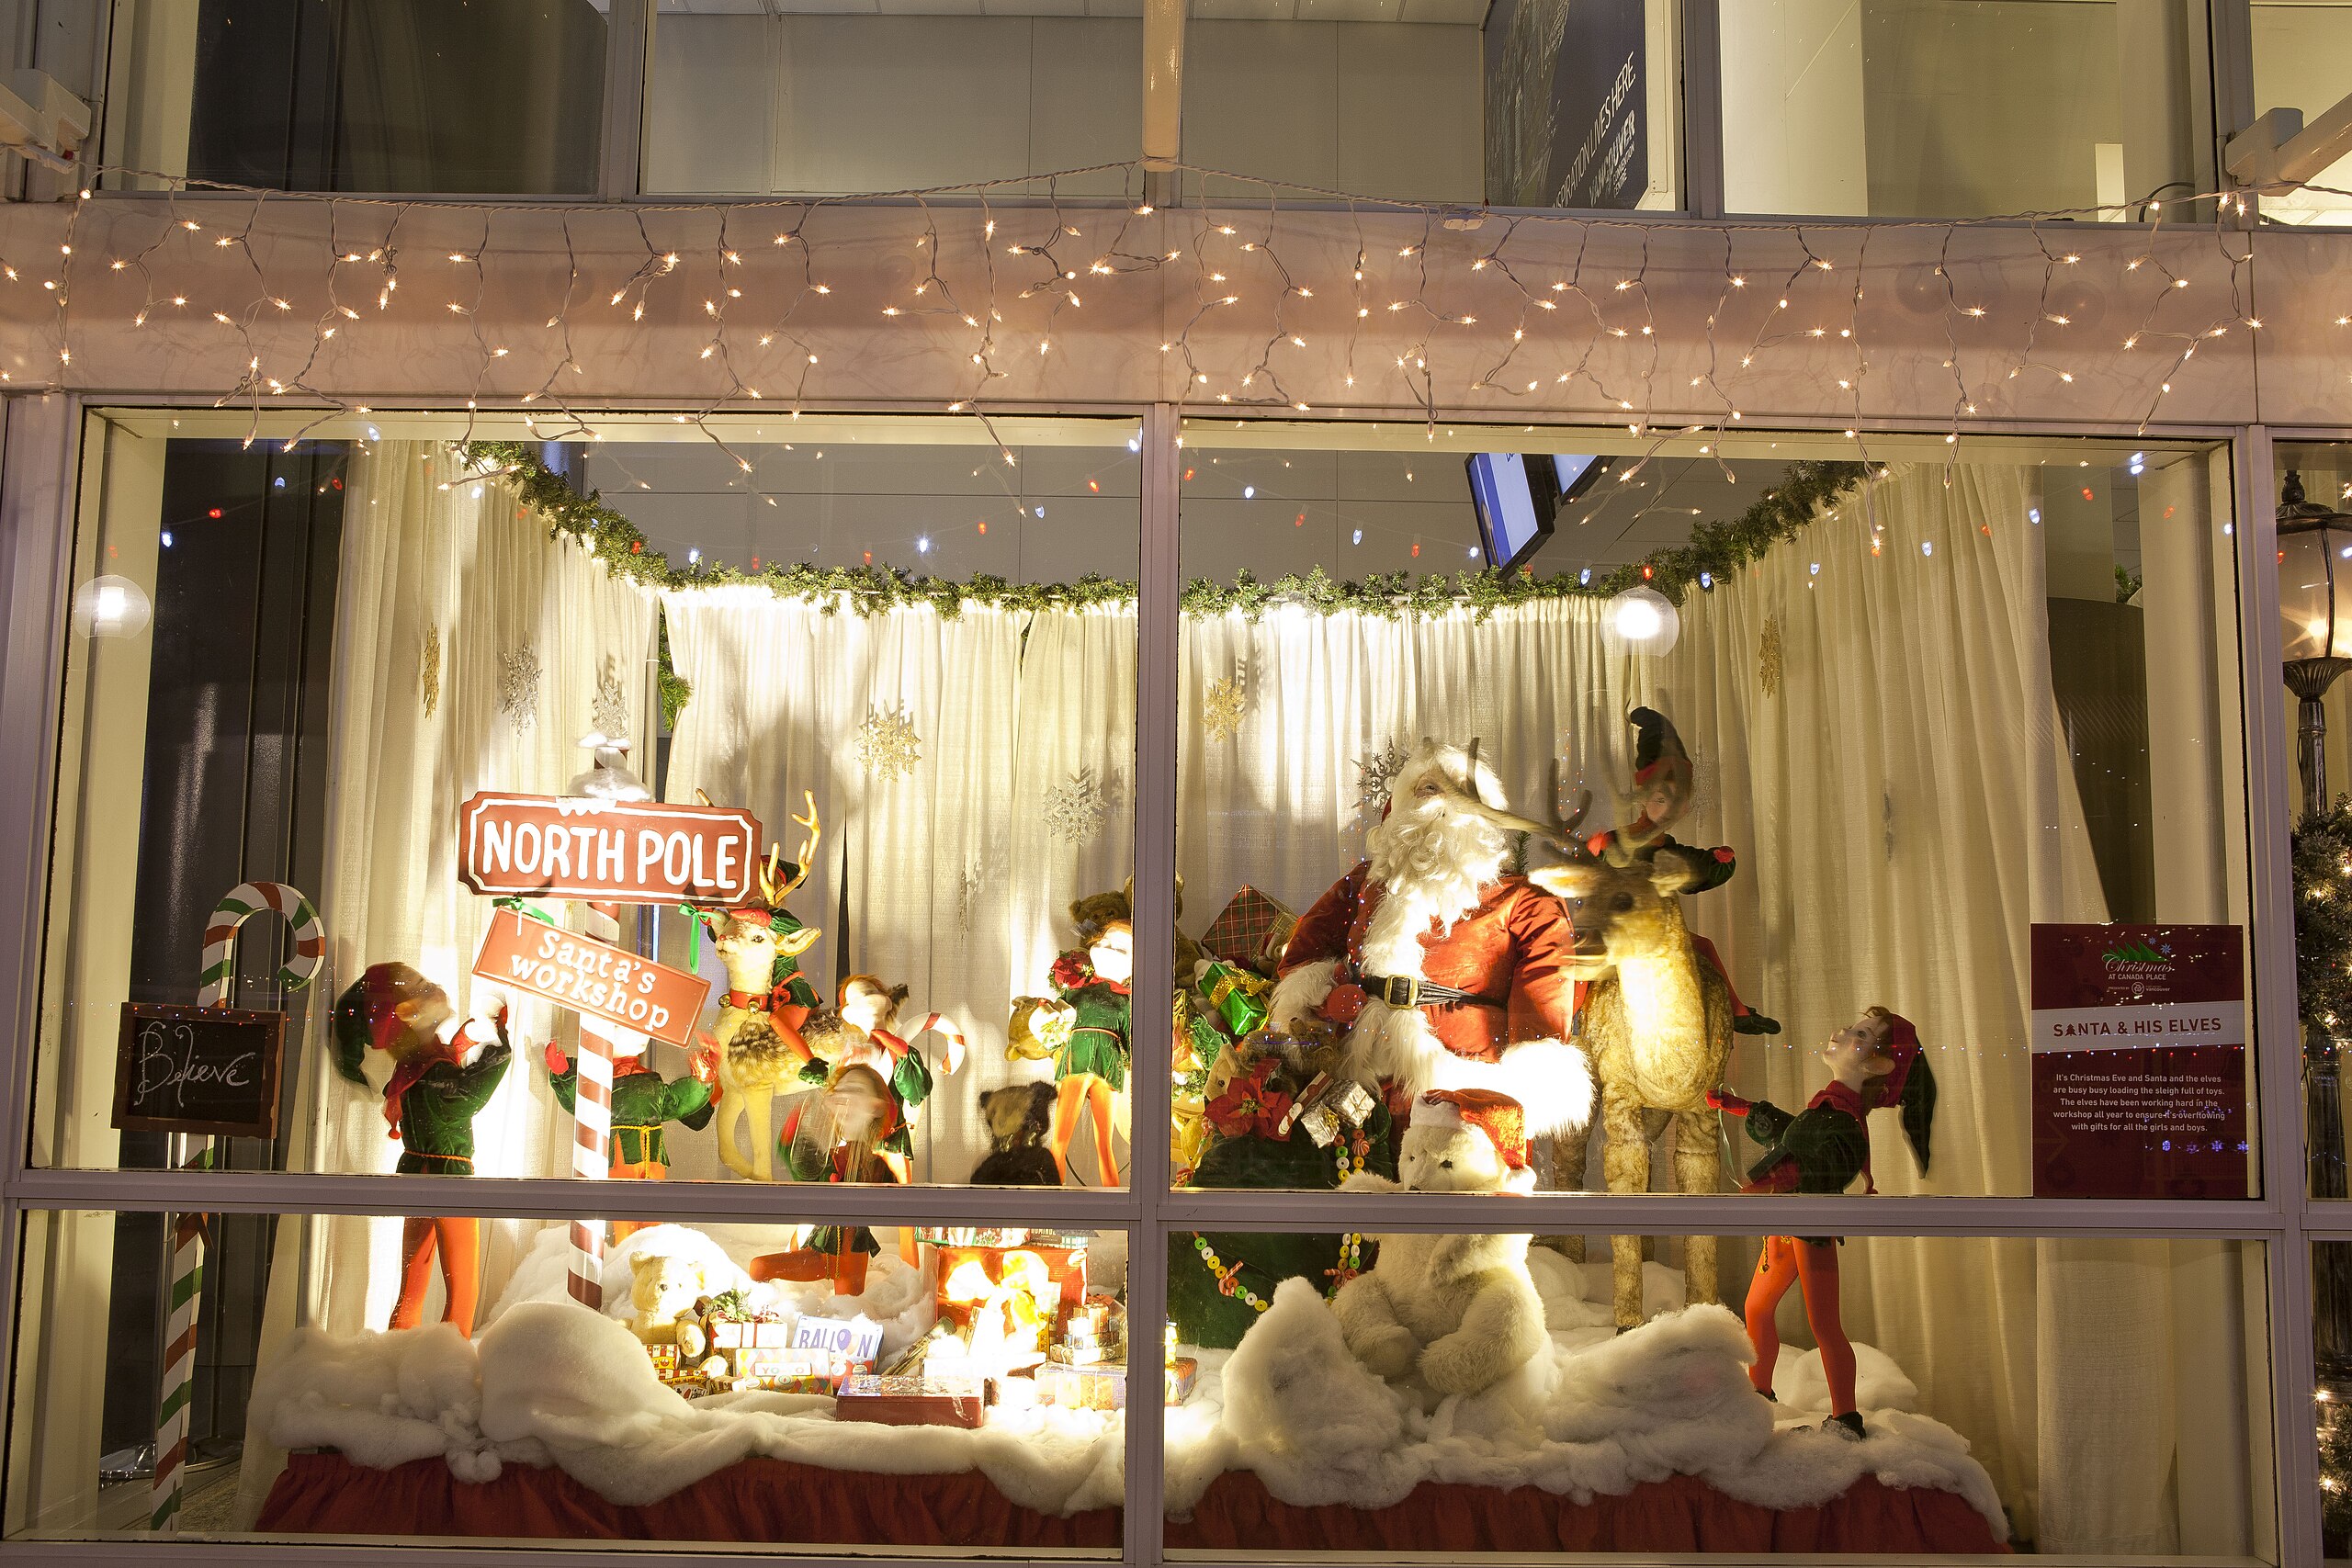 A hazardous display of santa claus figurines in a window.